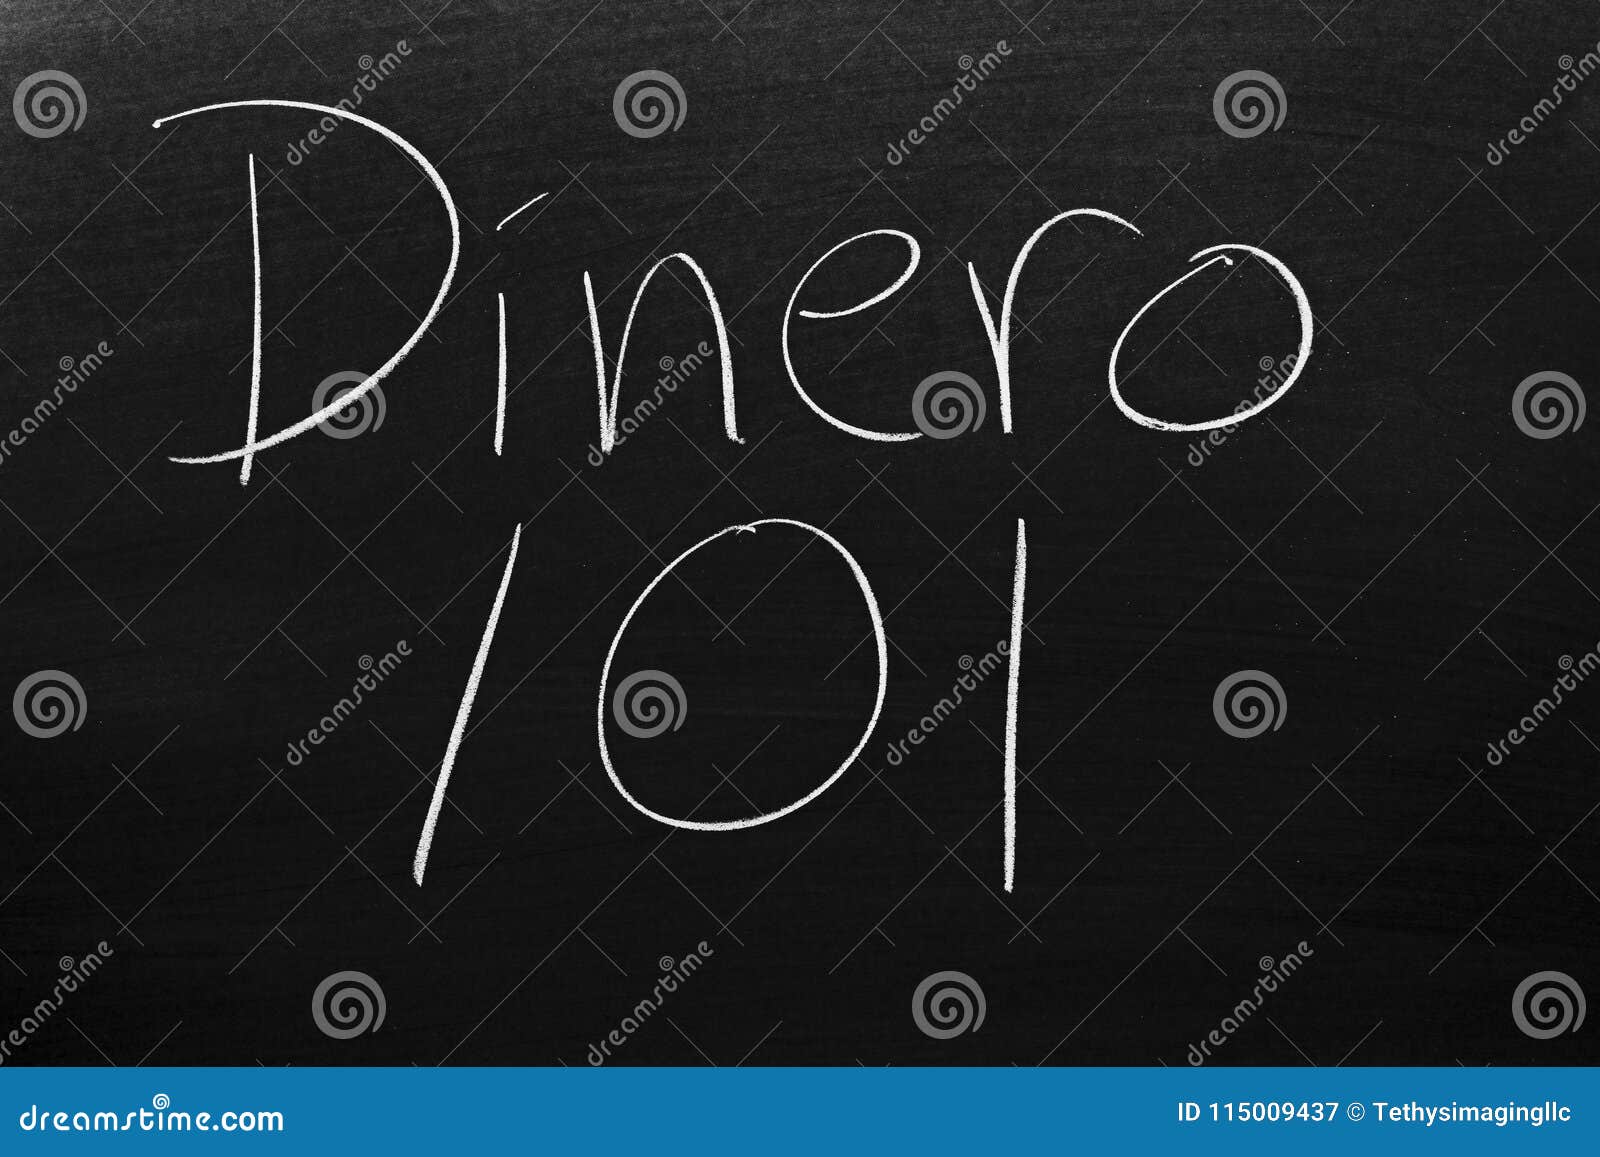 dinero 101 on a blackboard